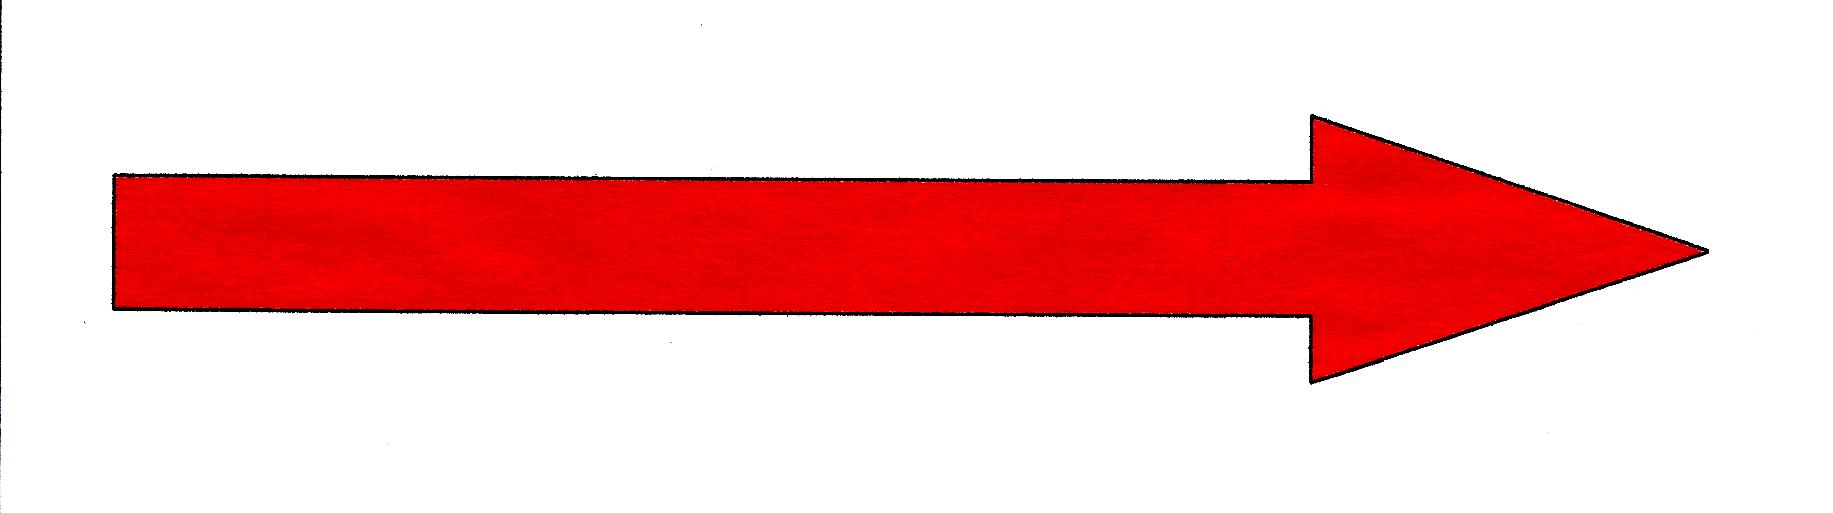 clipart big red arrow - photo #50